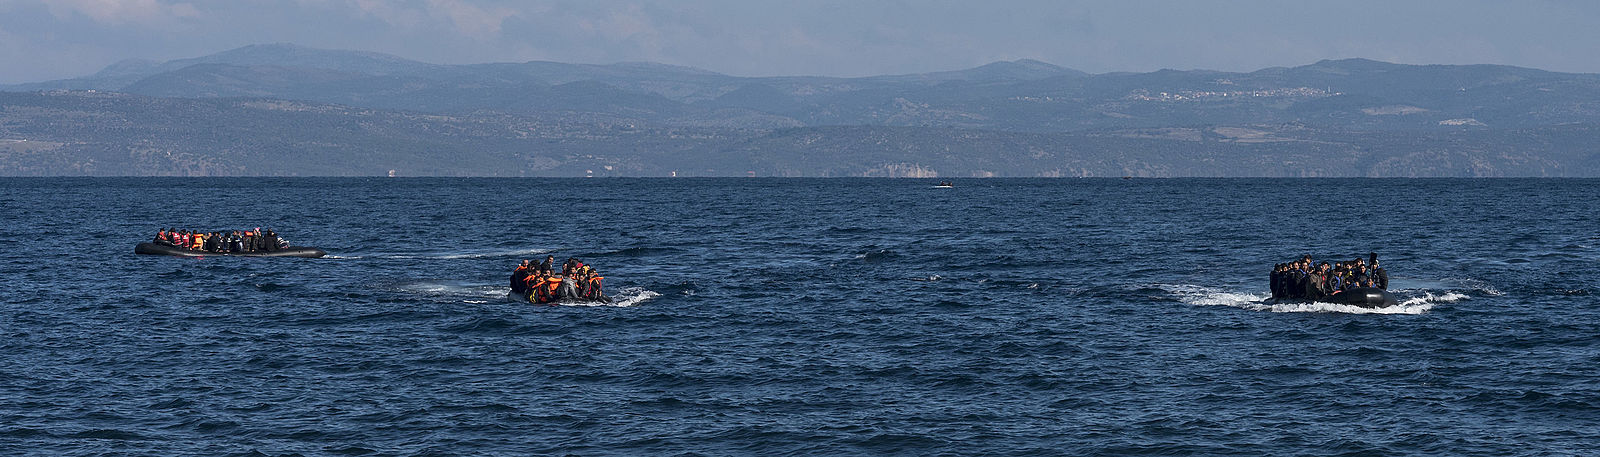 Greece judge dismisses deadly Pylos migrant shipwreck case for lack of jurisdiction